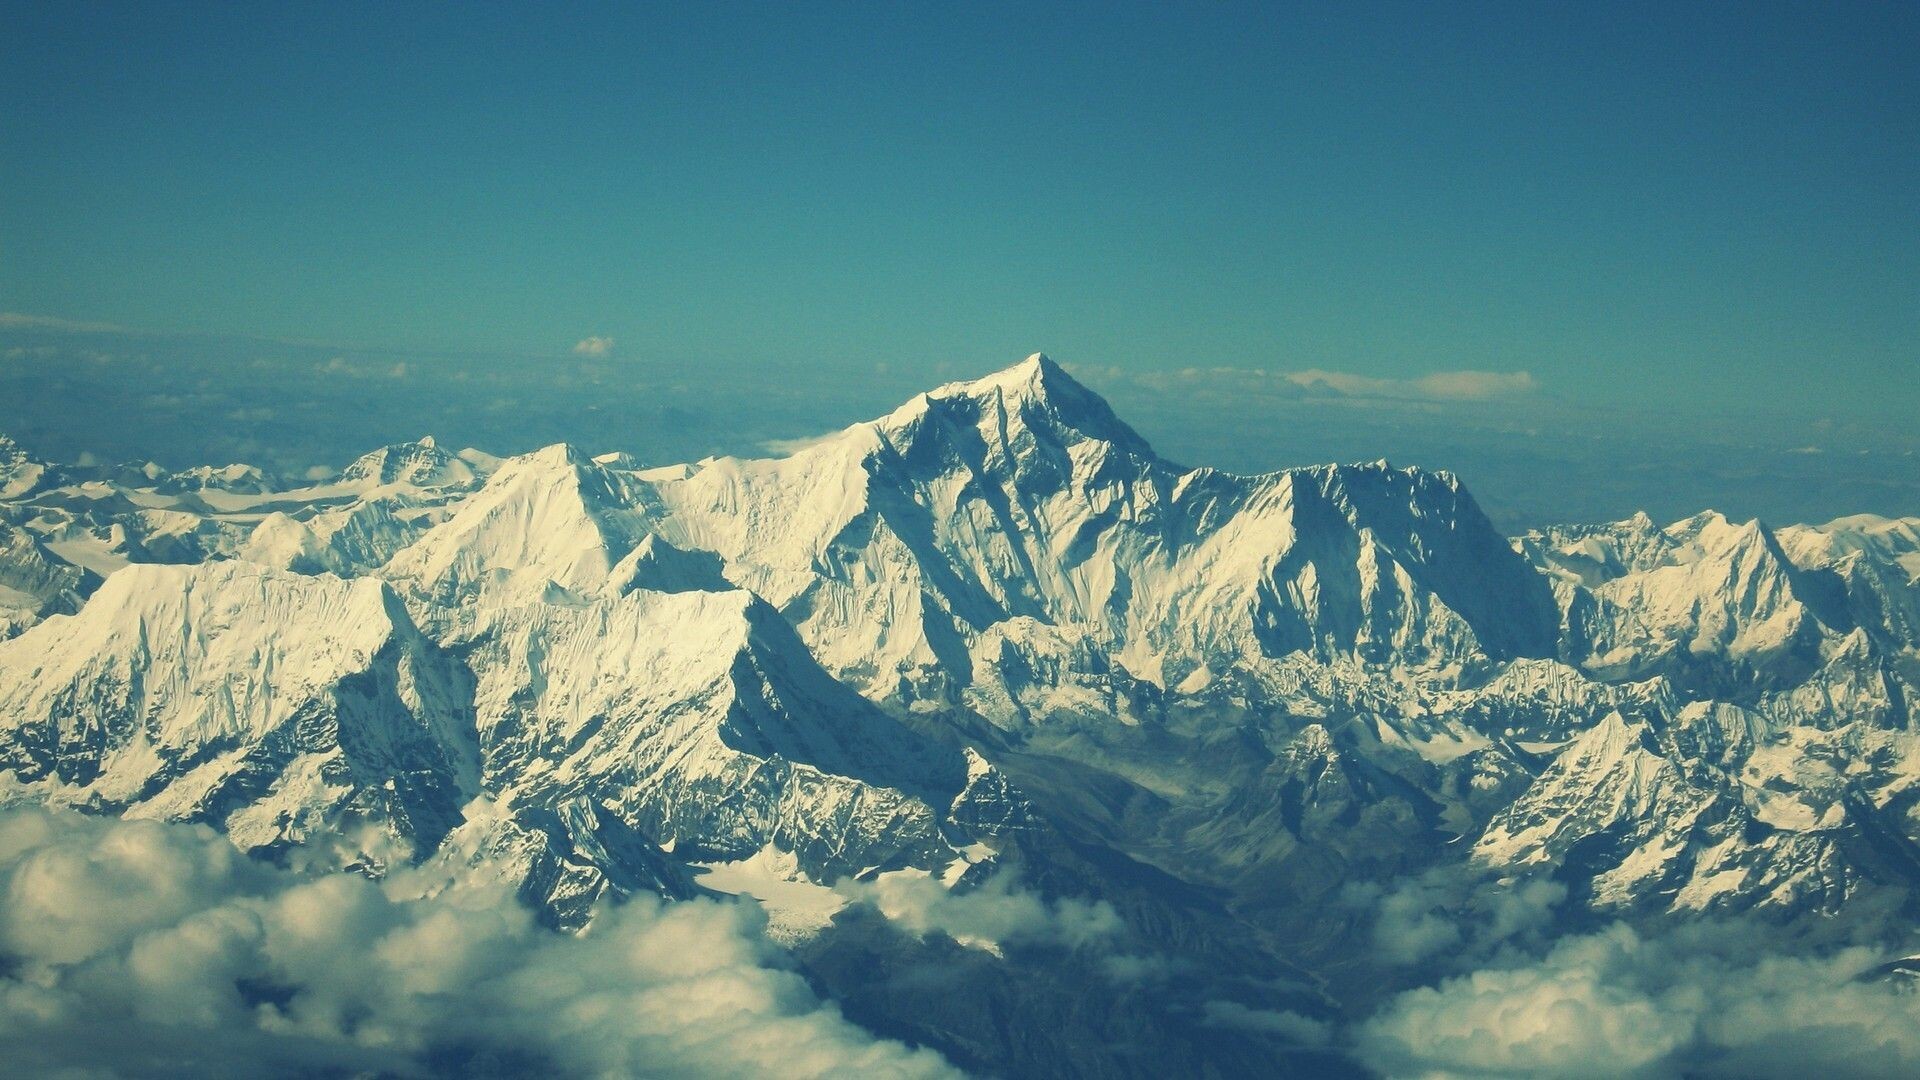 Mount Everest: The Mahalangur Himal sub-range of the Himalayas, Snowy peaks. 1920x1080 Full HD Wallpaper.